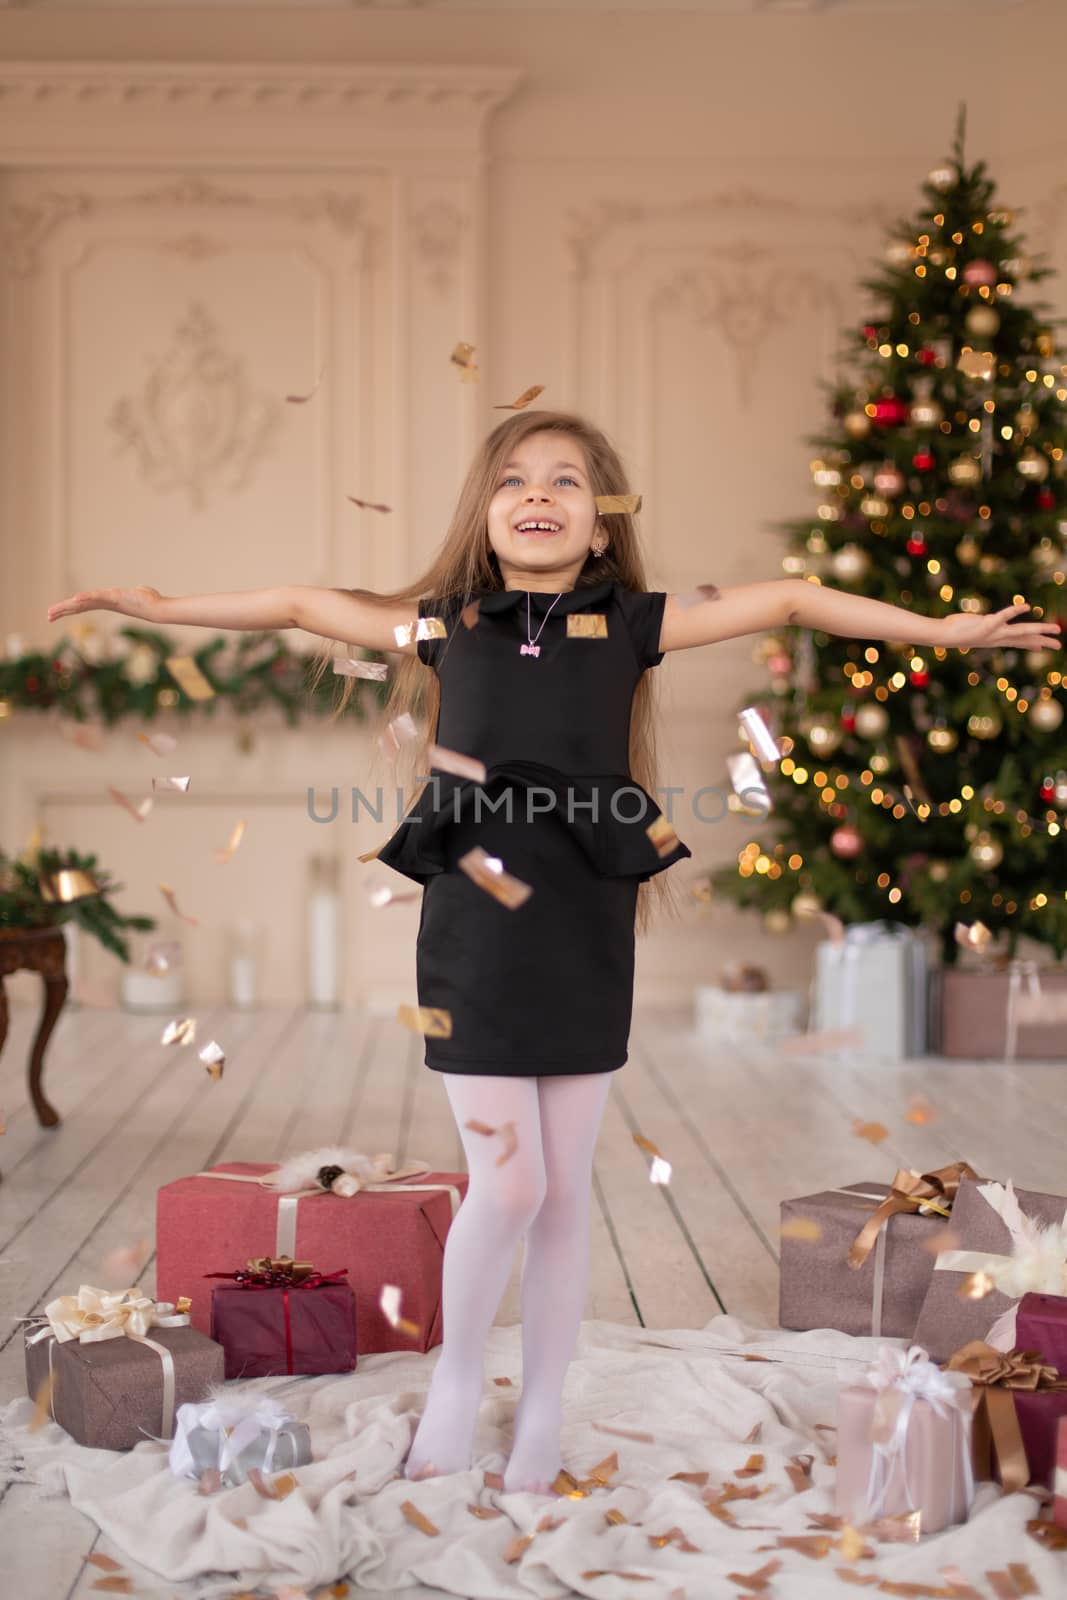 Little girl throws confetti. Christmas magic. Joyful moments of a happy childhood.